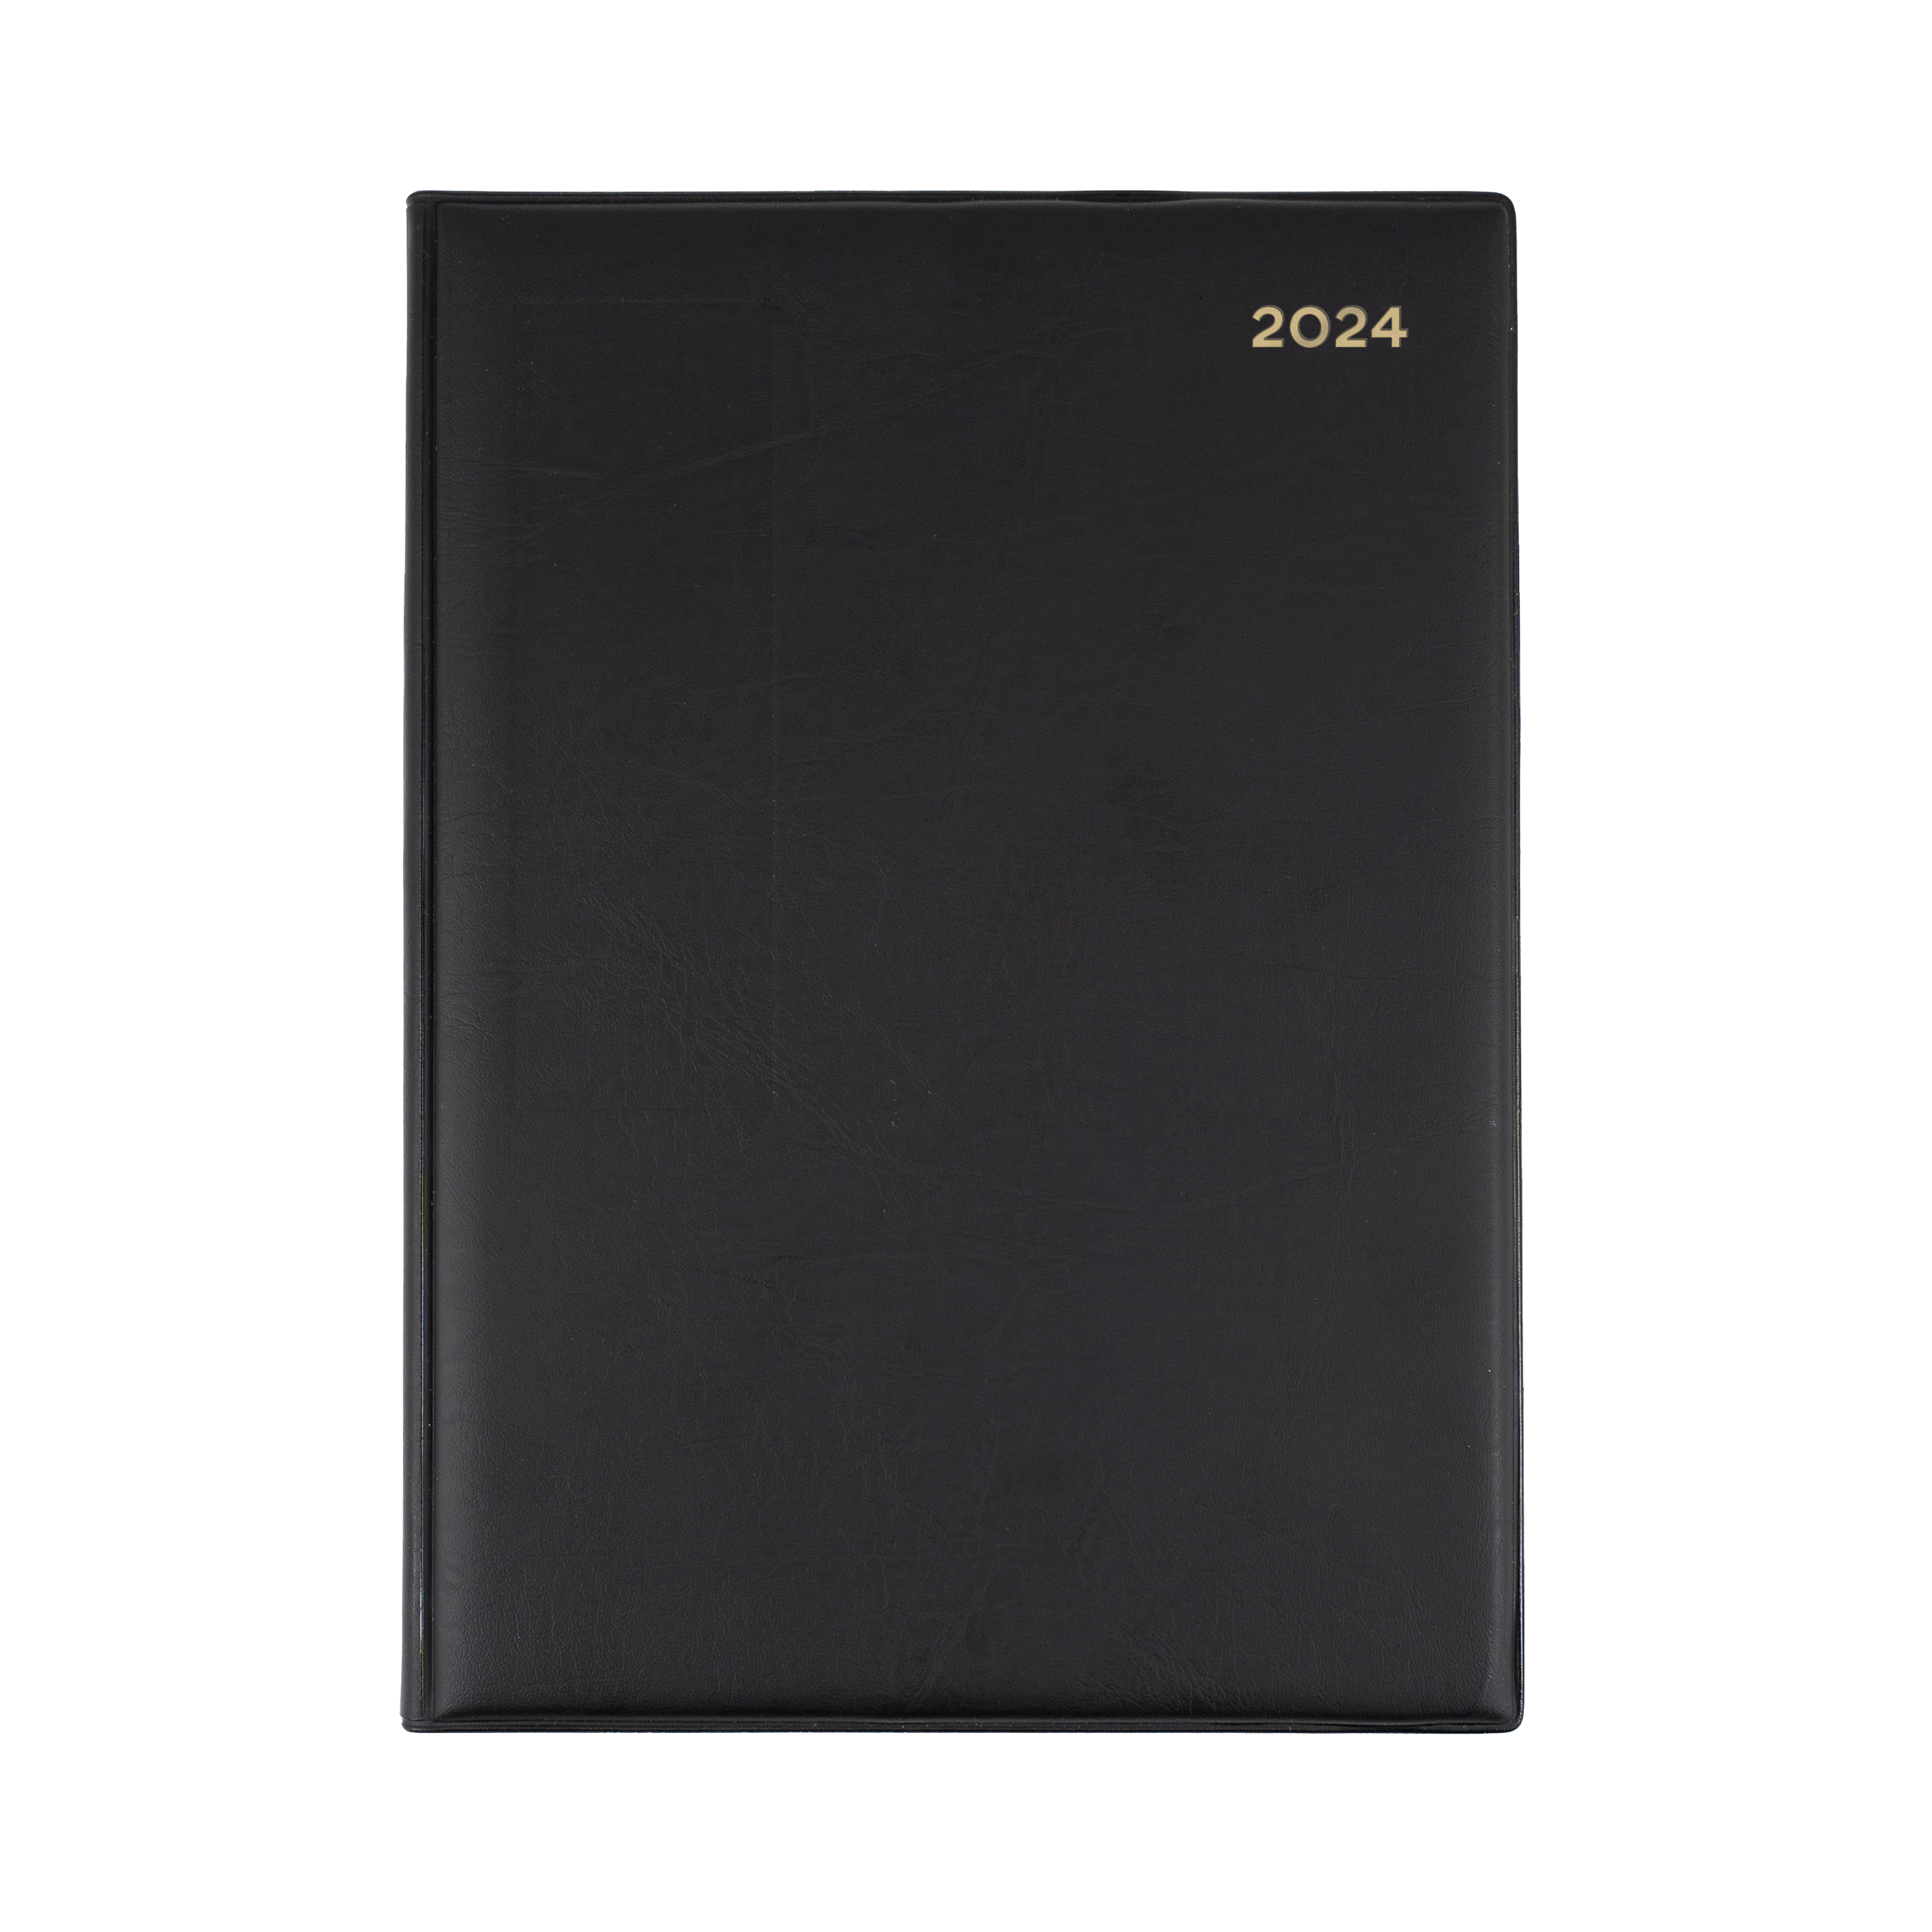 Belmont Desk 2024 Diary - Week to View, Size Quarto Black / Quarto (260 x 210mm)